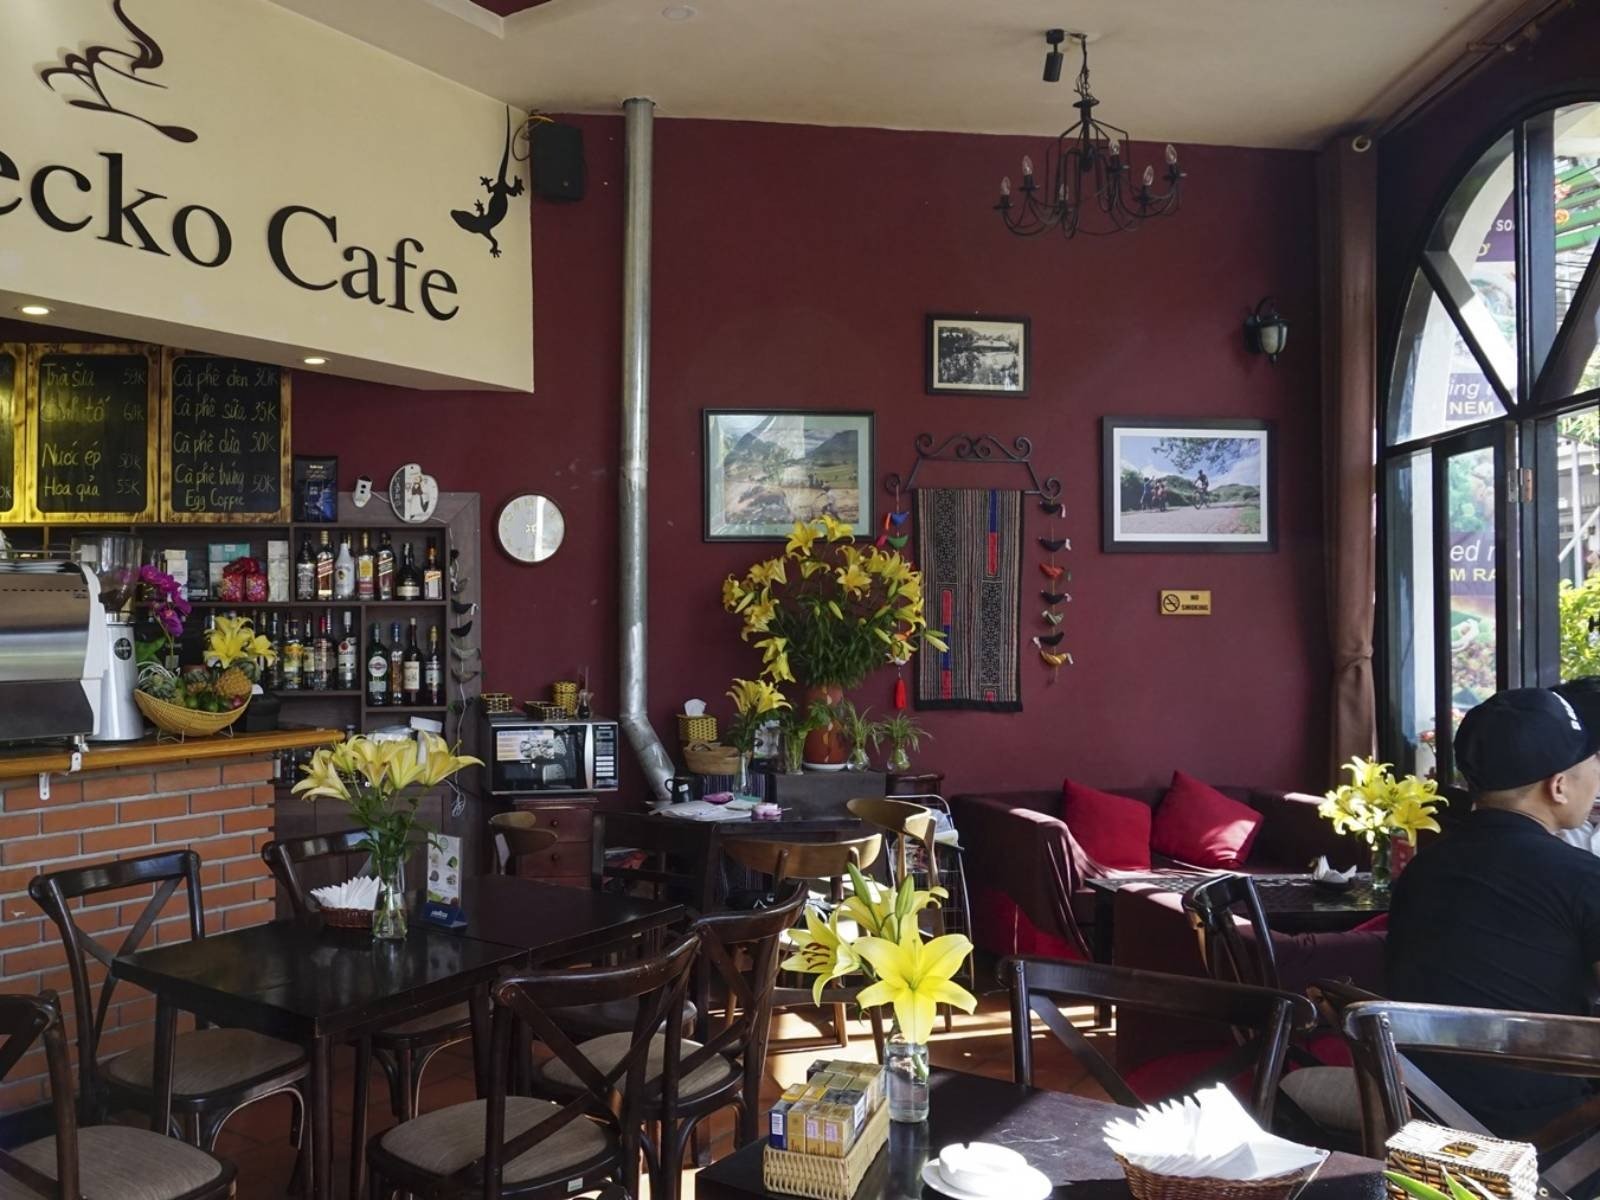 Le Gecko Cafe sapa